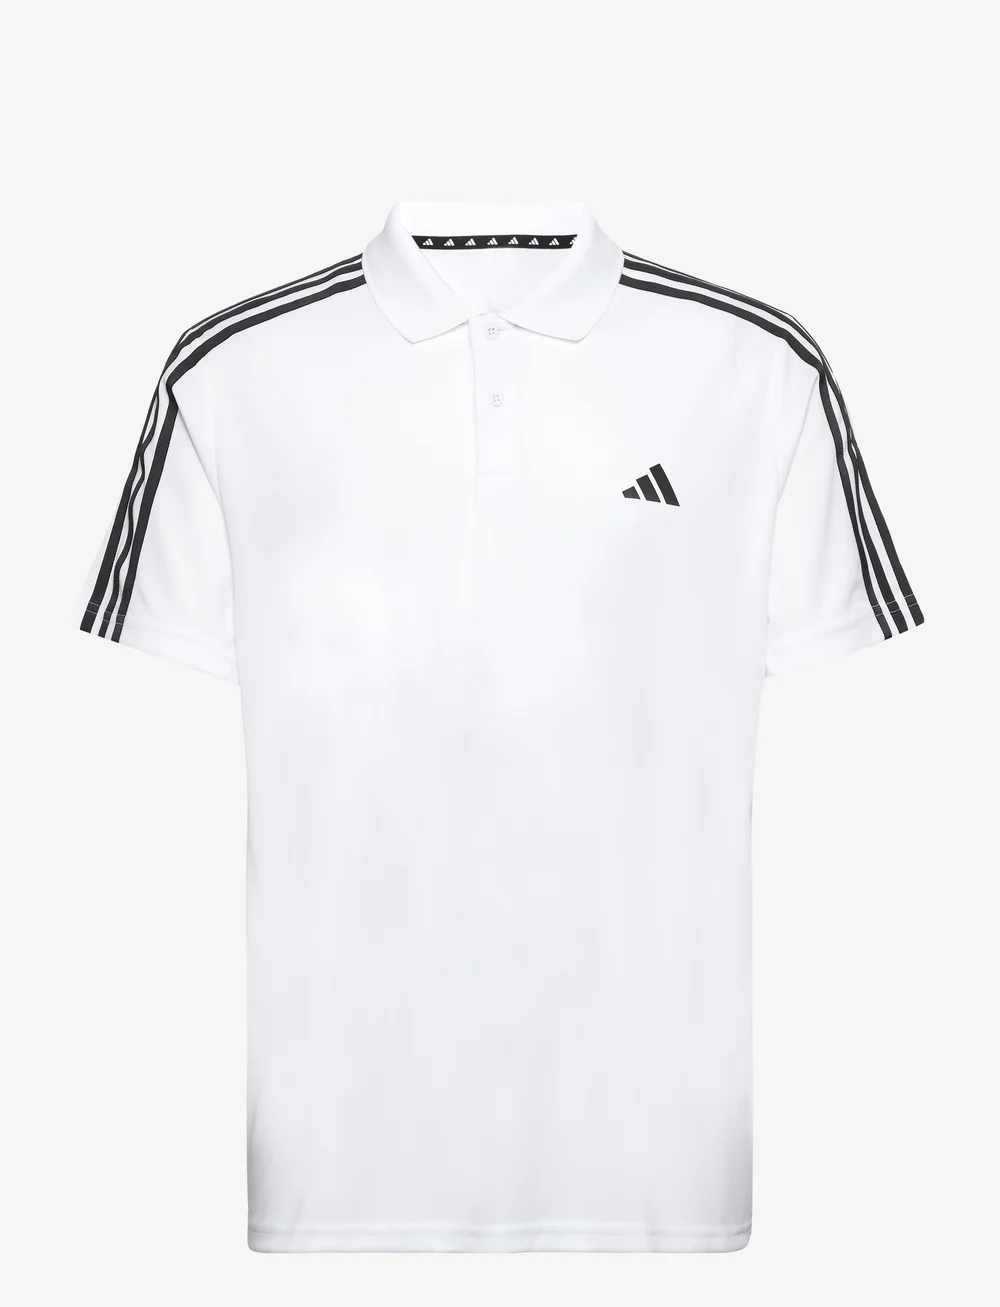 - Piqué Polo Essentials Poloshirts Train Performance Training 3-stripes adidas Shirt